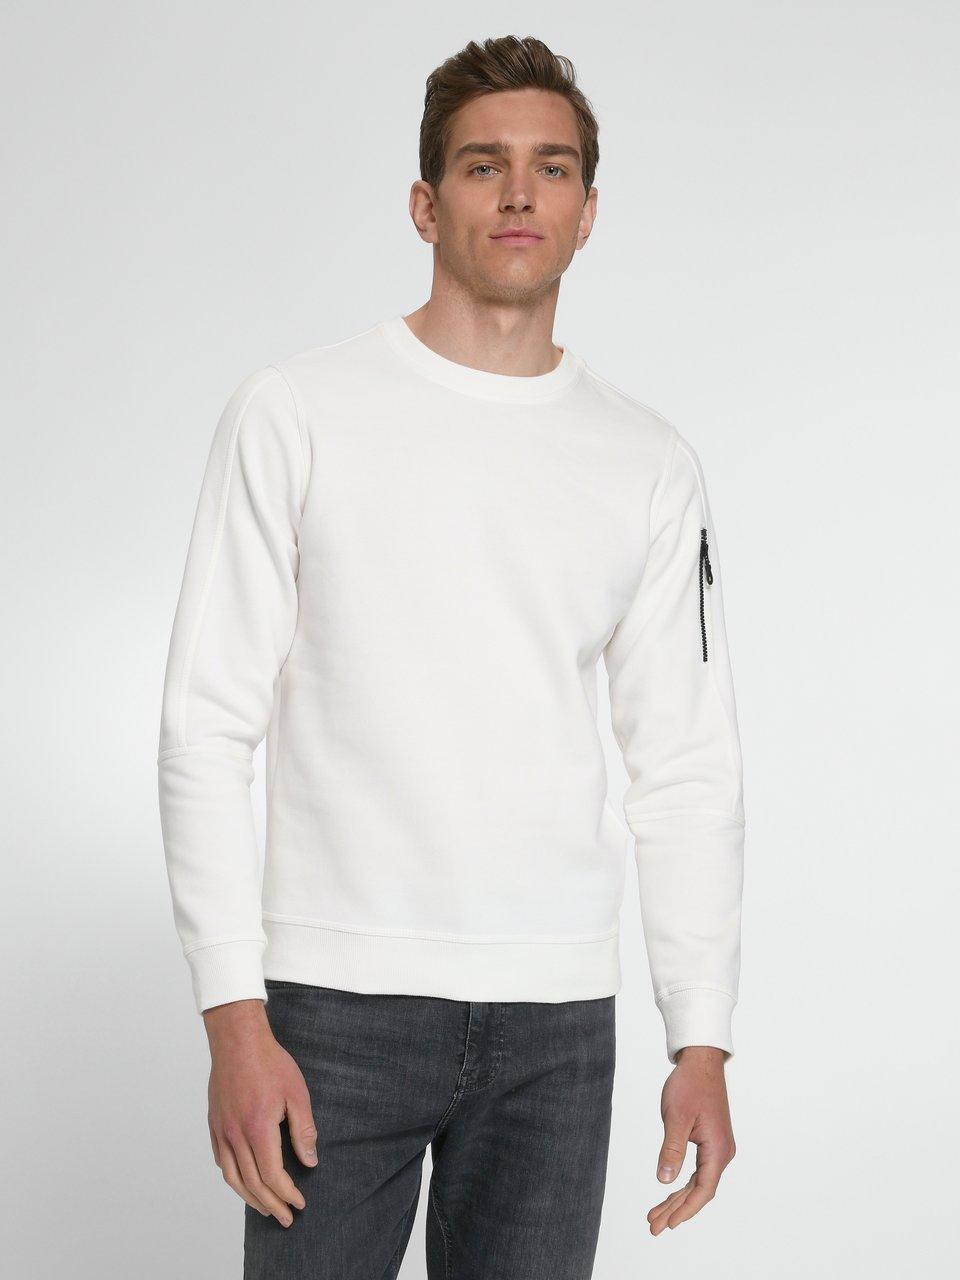 Louis Sayn - Sweatshirt van 100% katoen